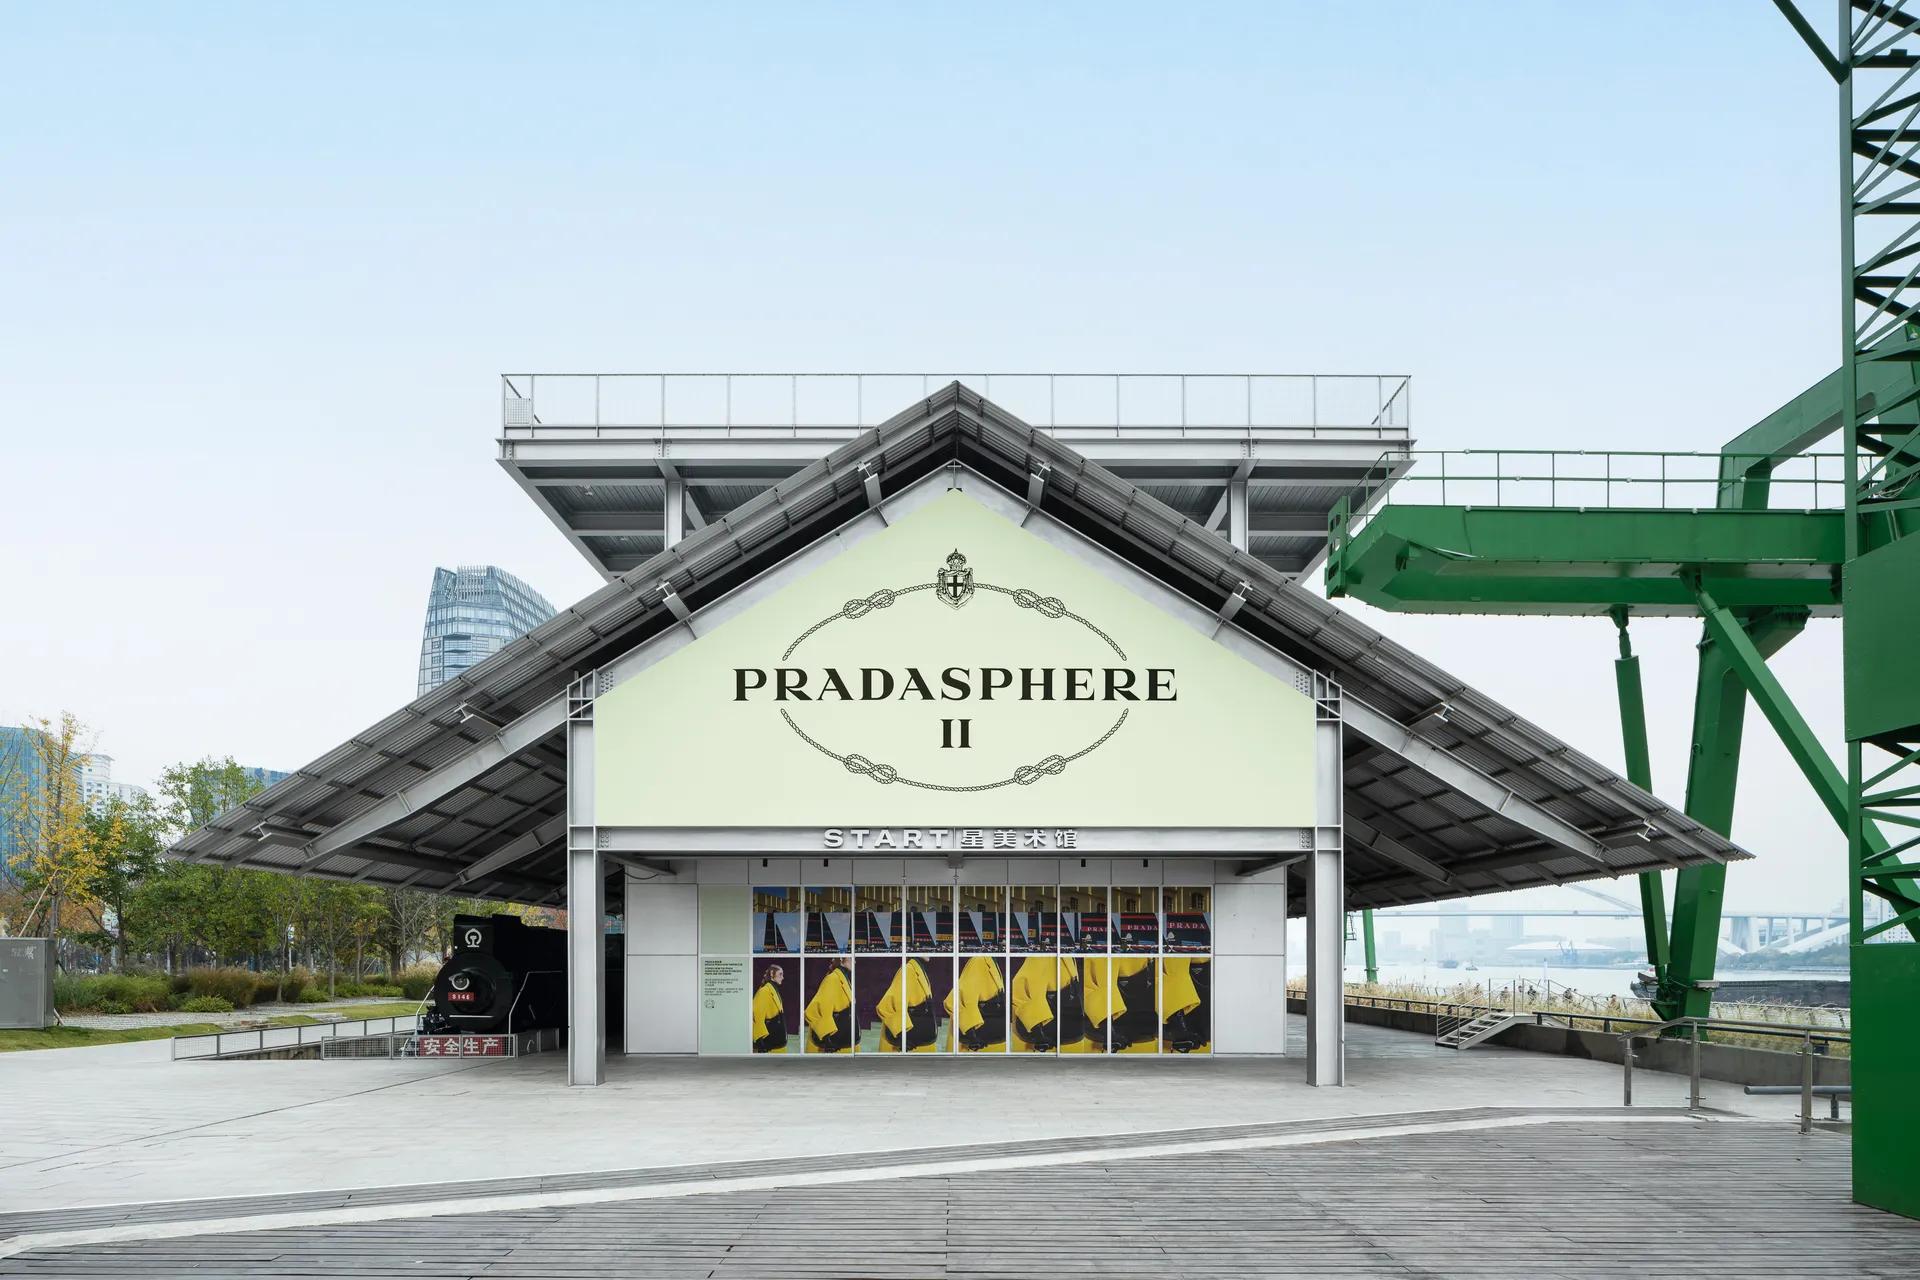 Prada’s China ambitions behind ‘Pradasphere II’  in Shanghai